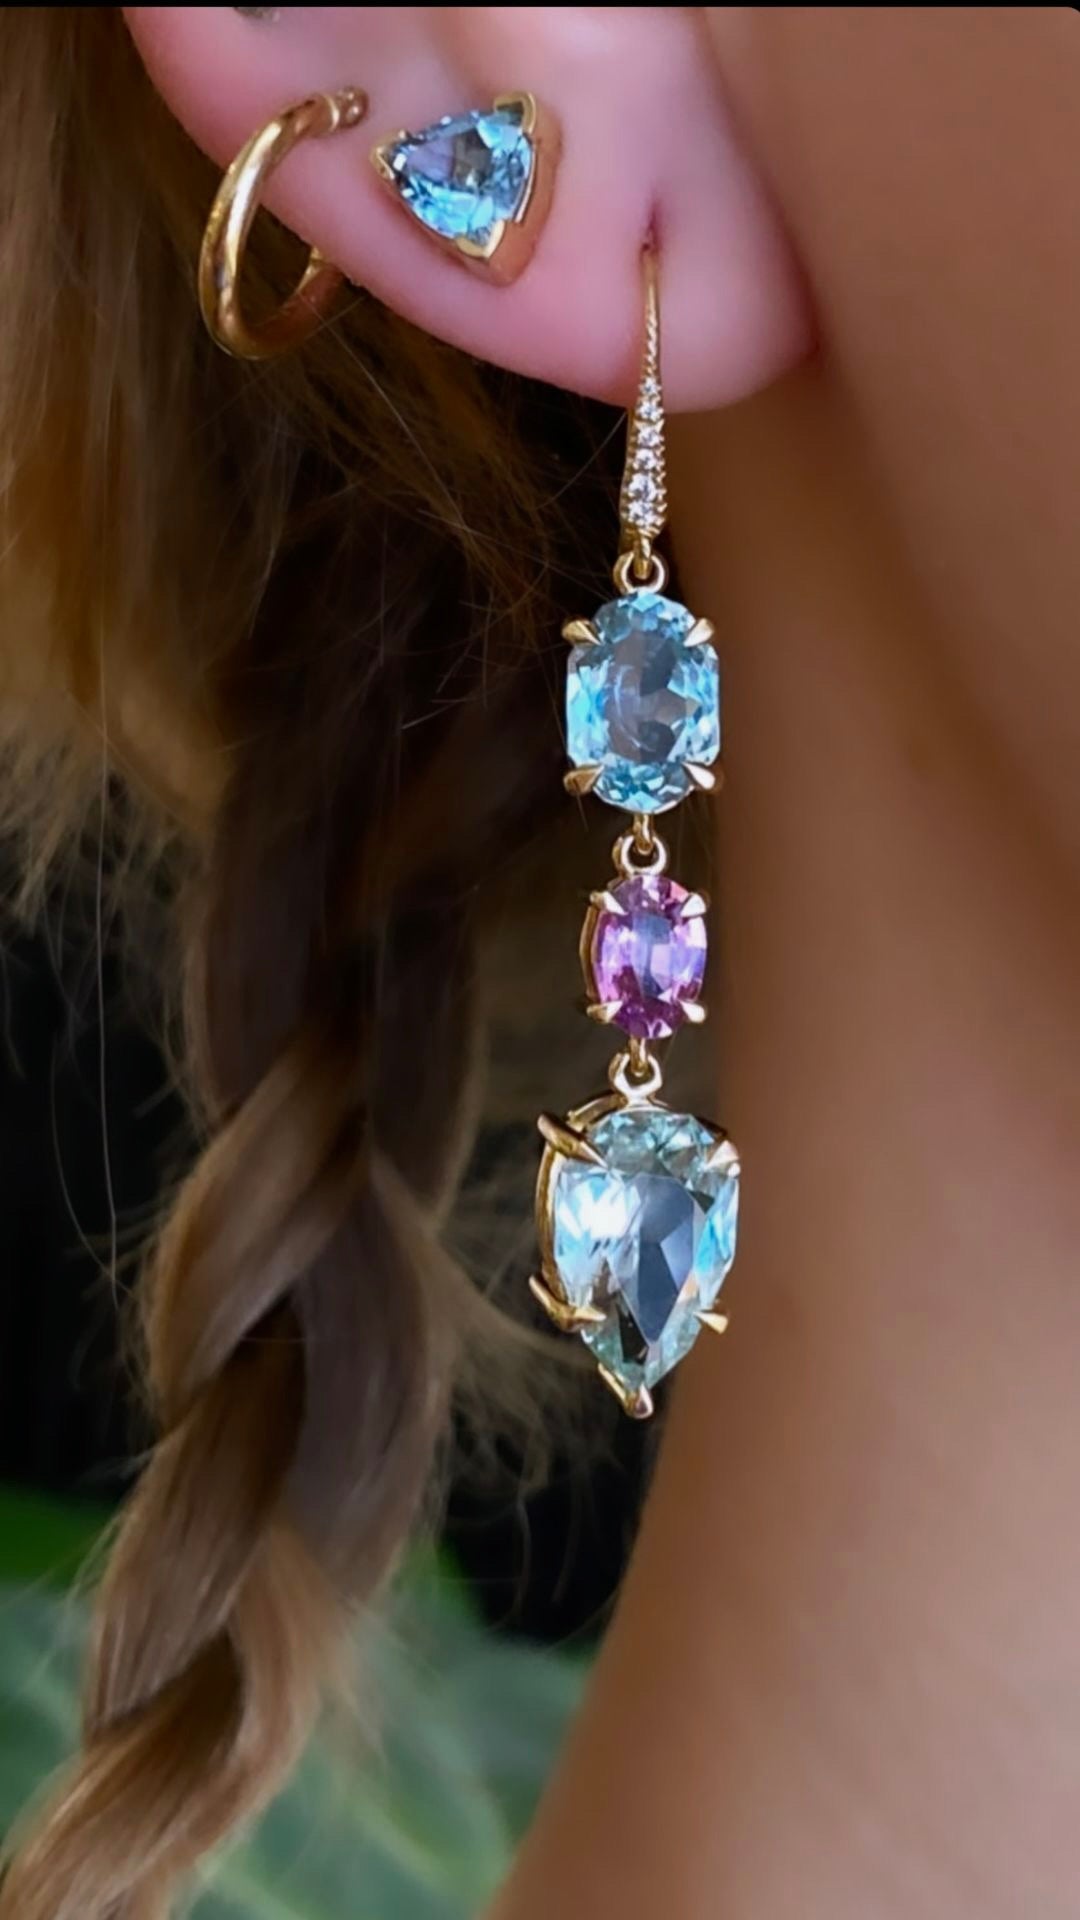 14k Pink Sapphire x Aquamarine Drop Earrings - Kingdom Jewelry